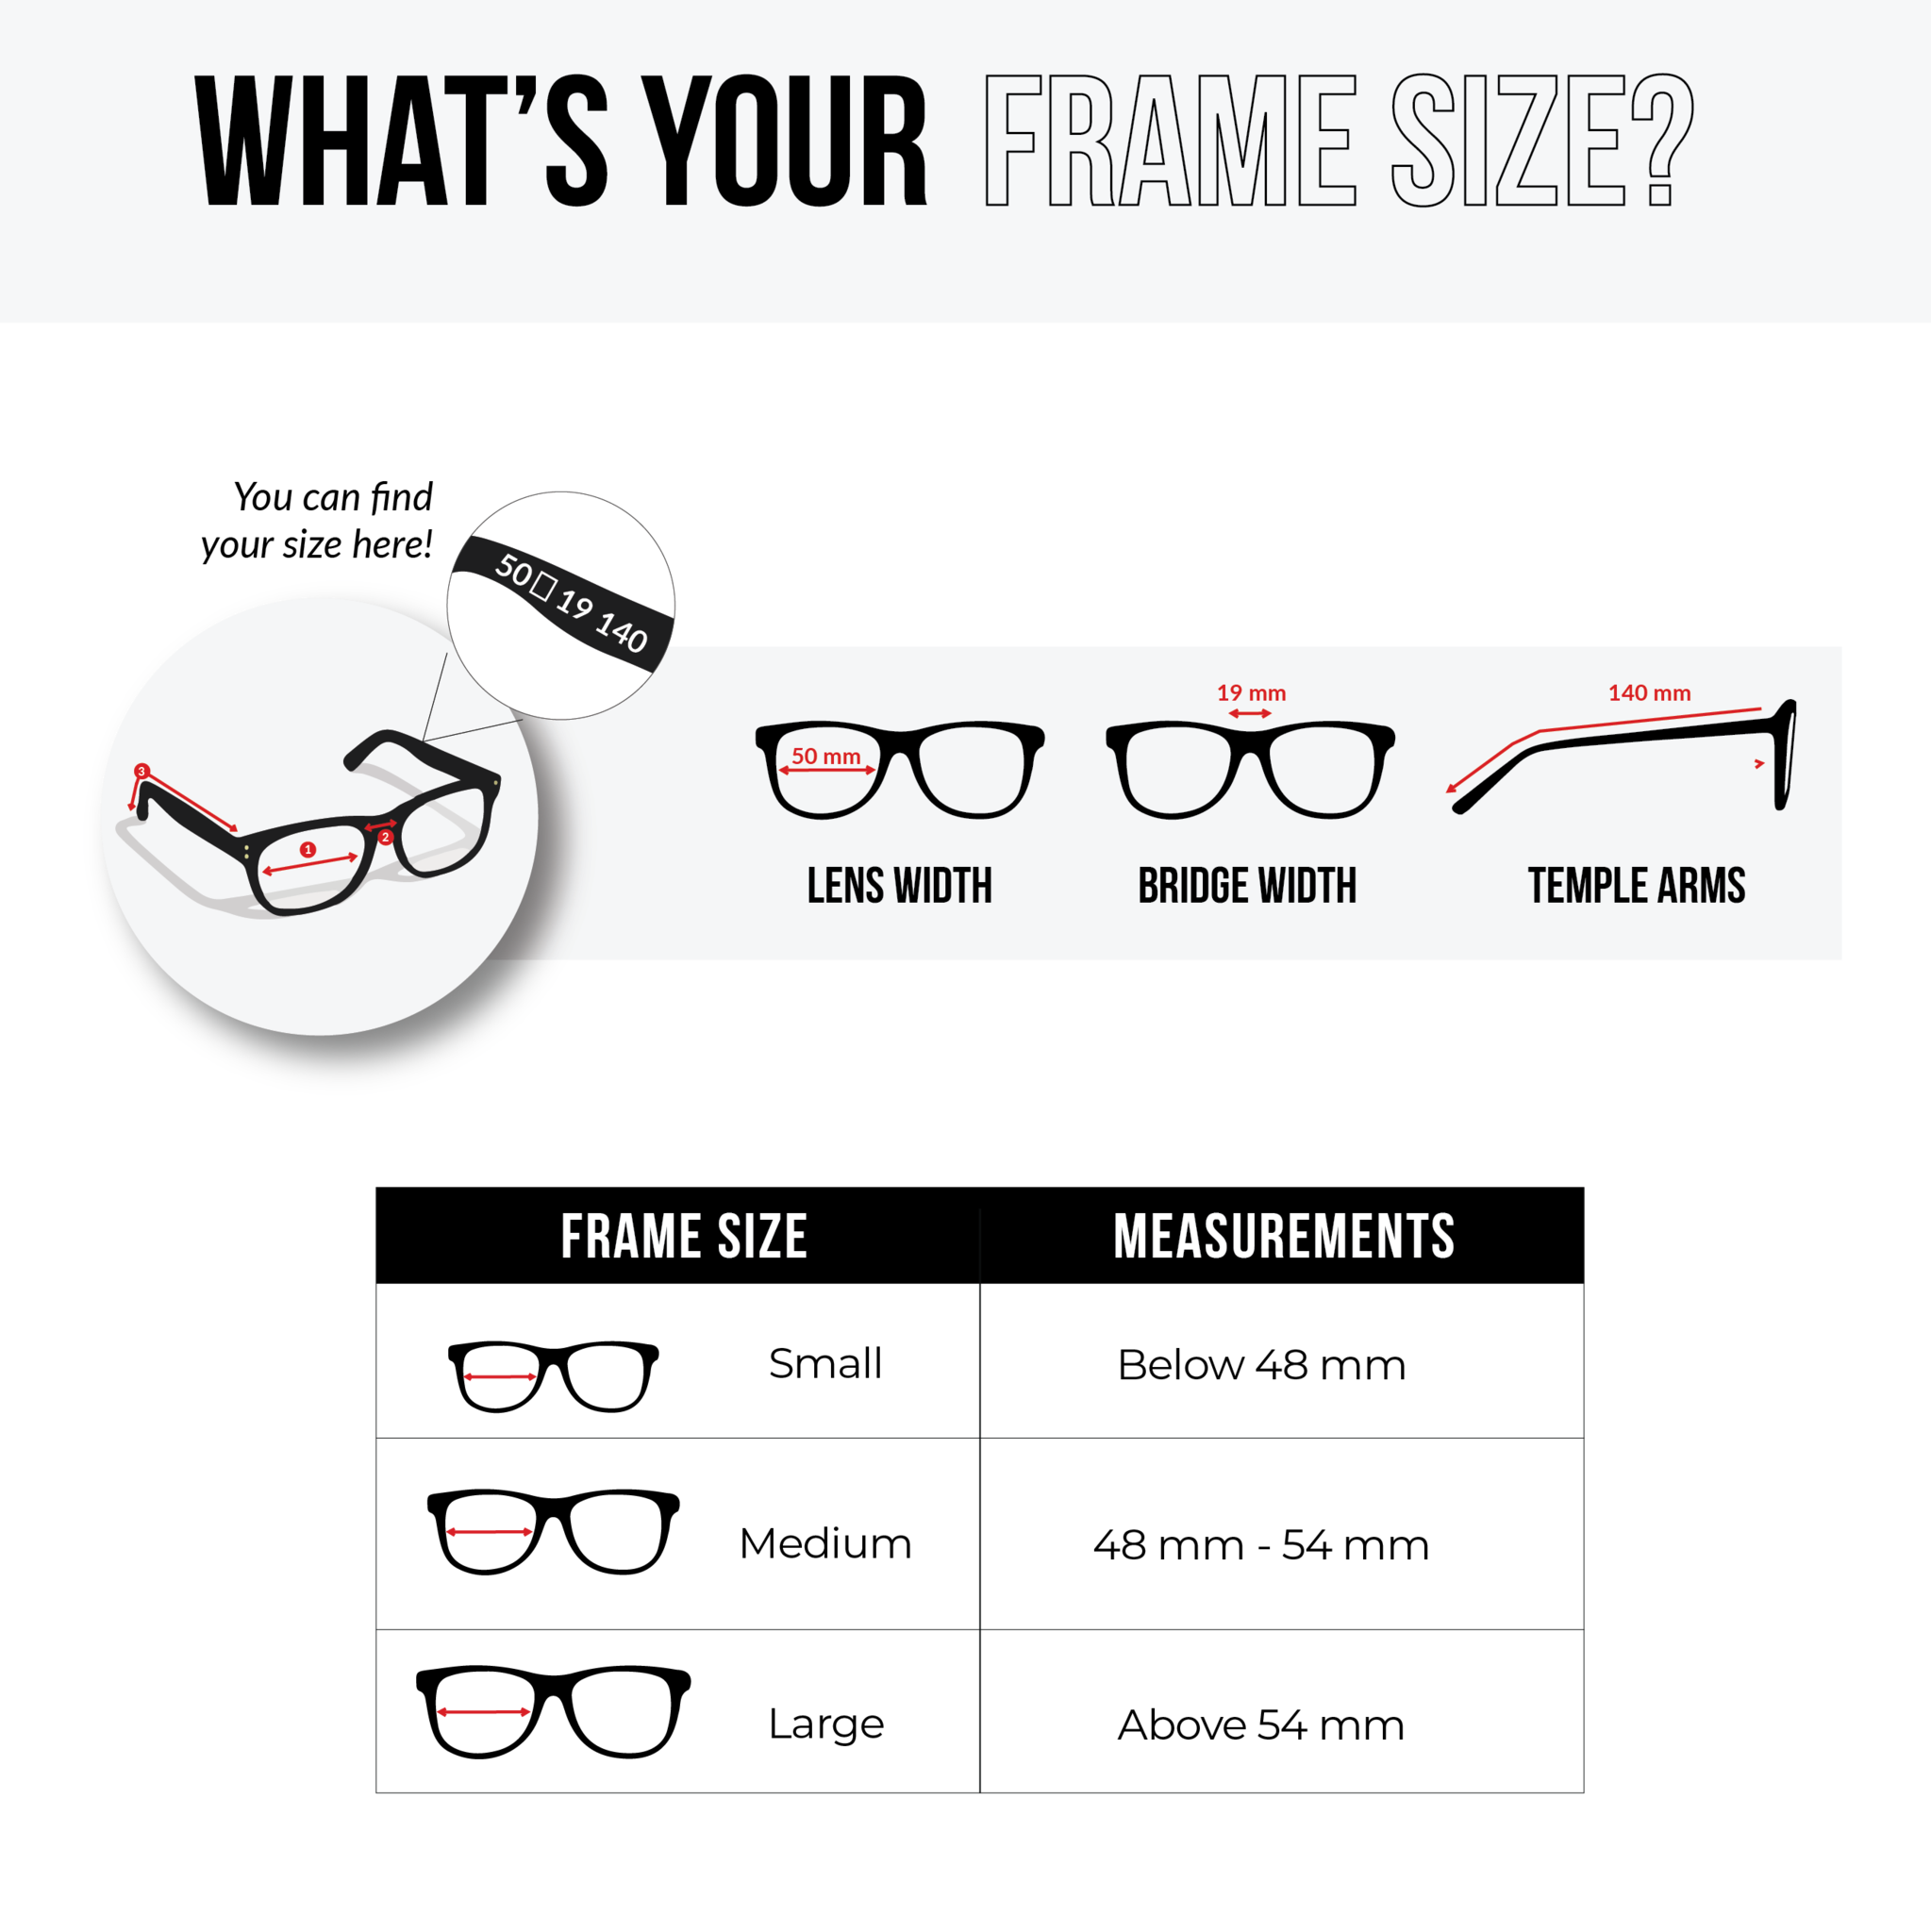 NS Deluxe - 3187 - Silver - Eyeglasses